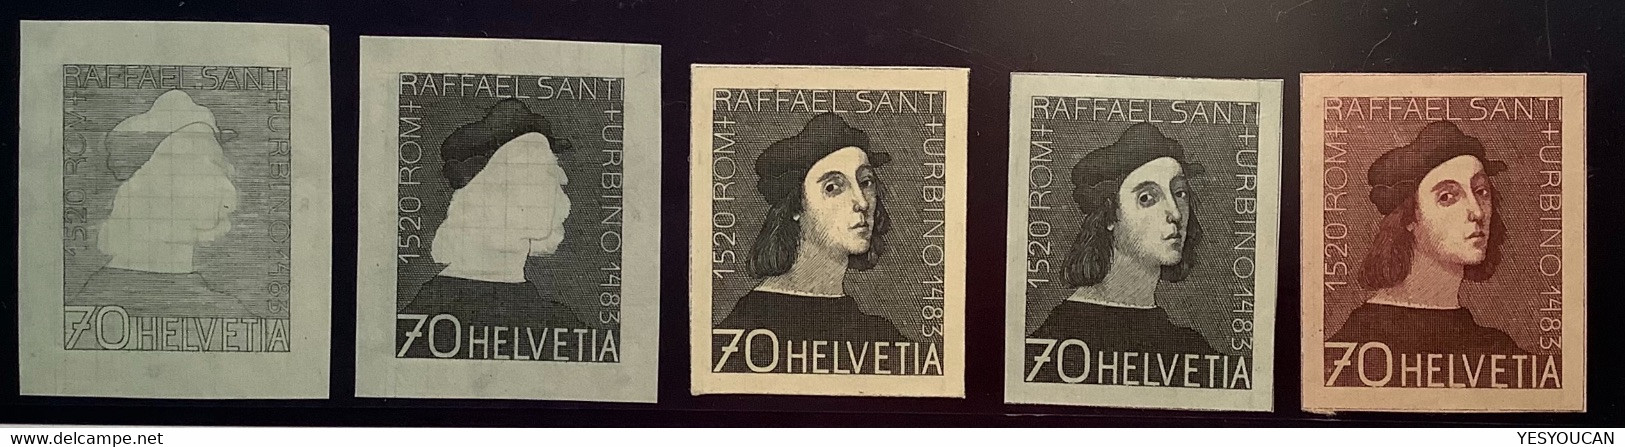 Schweiz1946 BICKEL ESSAY "RAFFAEL SANTI"1483-1520 Raphael Italian Renaissance Painter&architect(Art Vatican Architecture - Nuovi